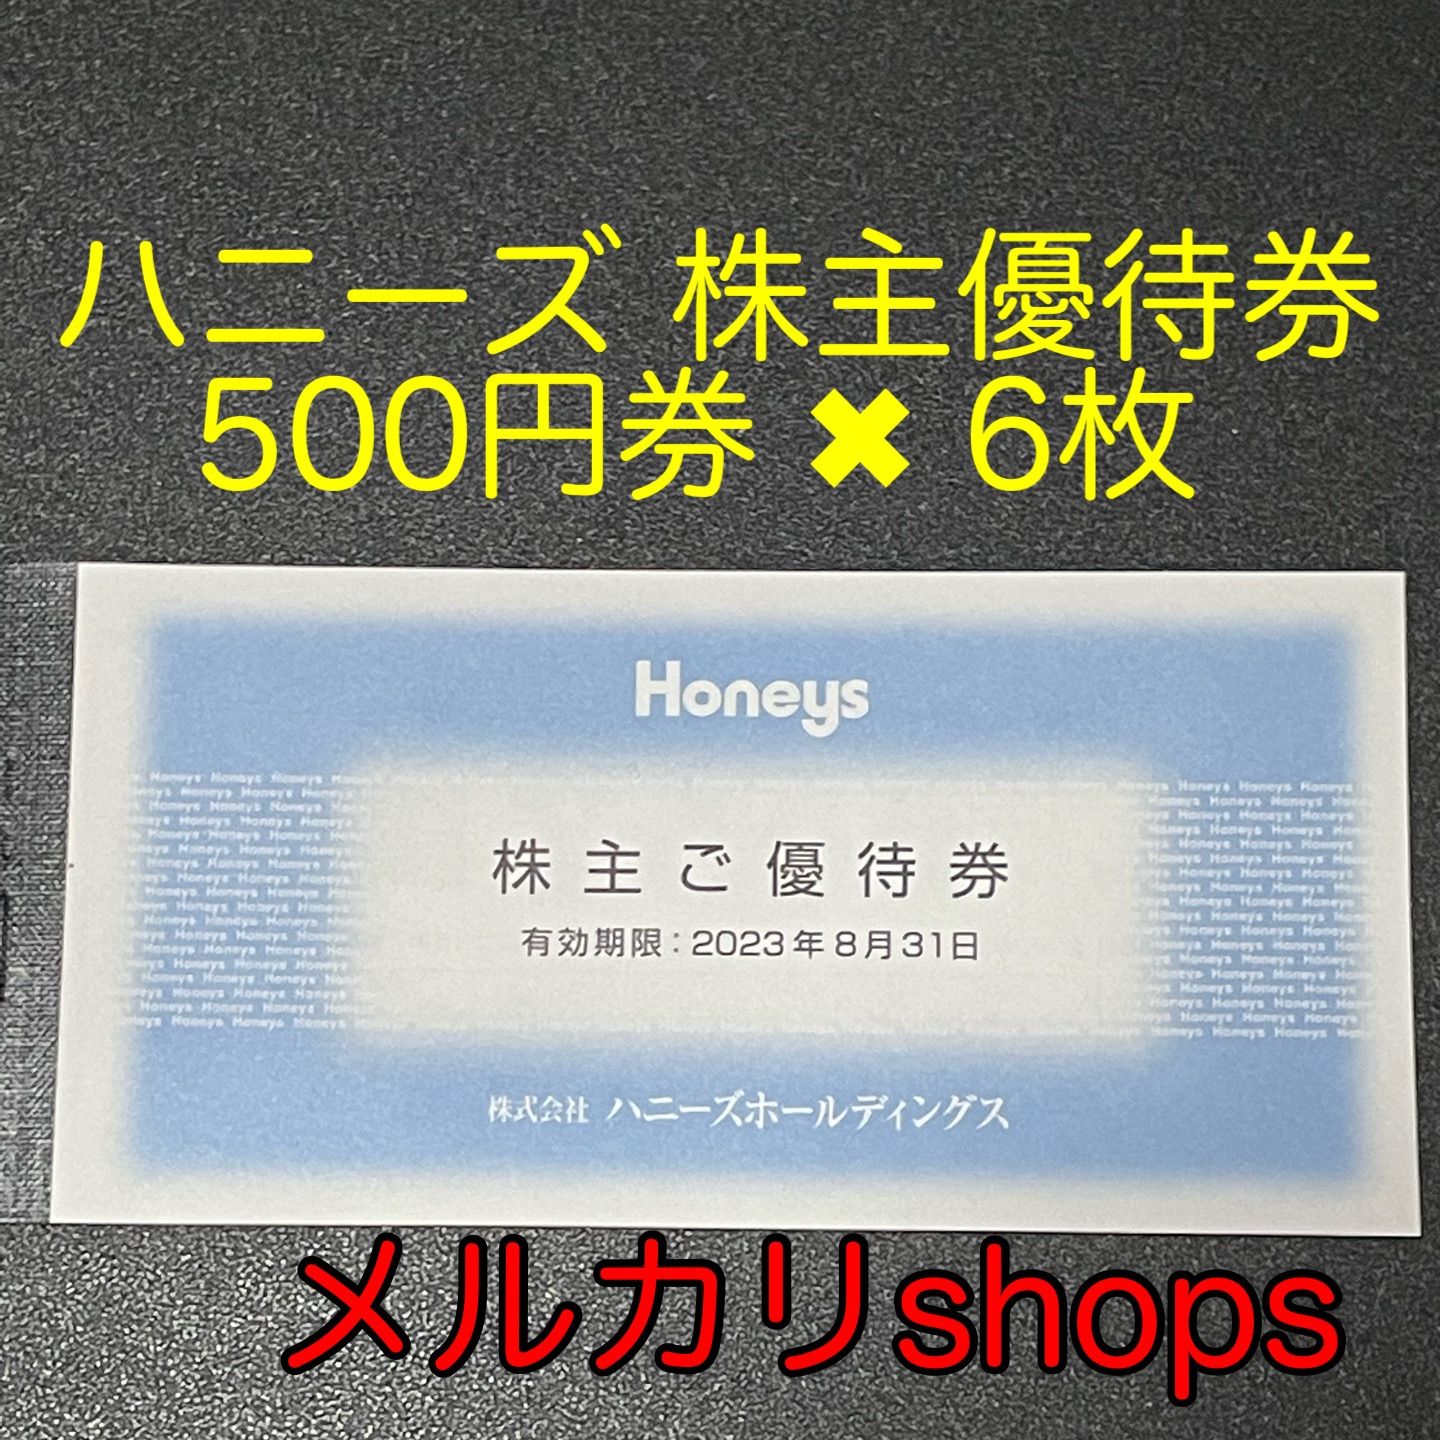 Honeys（ハニーズ）株主優待券(3000円分) - 割引券